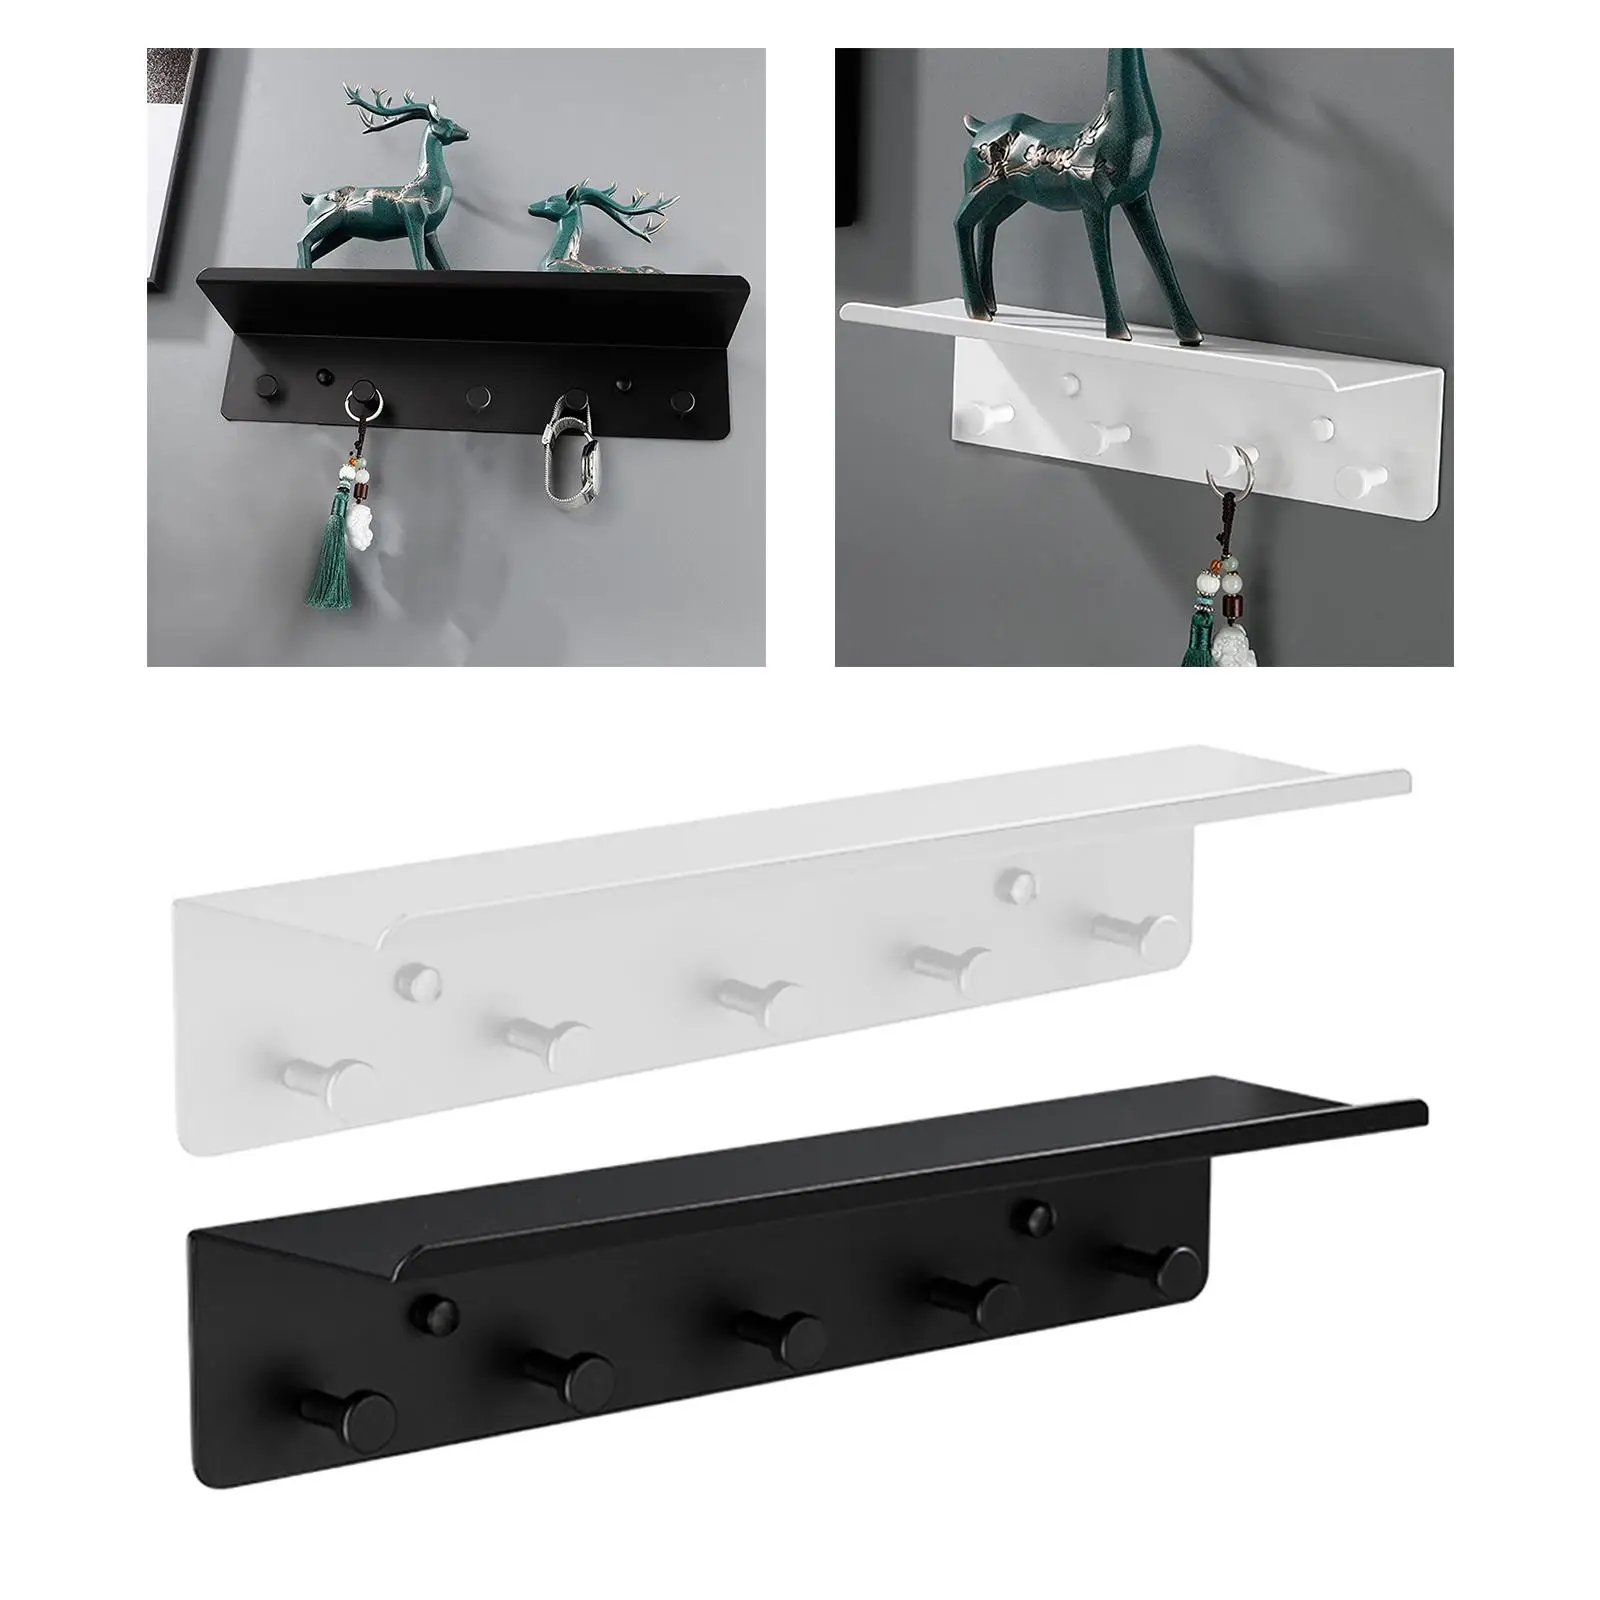 Hanging Key Hook Key Hanger with Shelf Mail Organizer with Hooks Key Hooks for Living Room Home Porch Bedroom